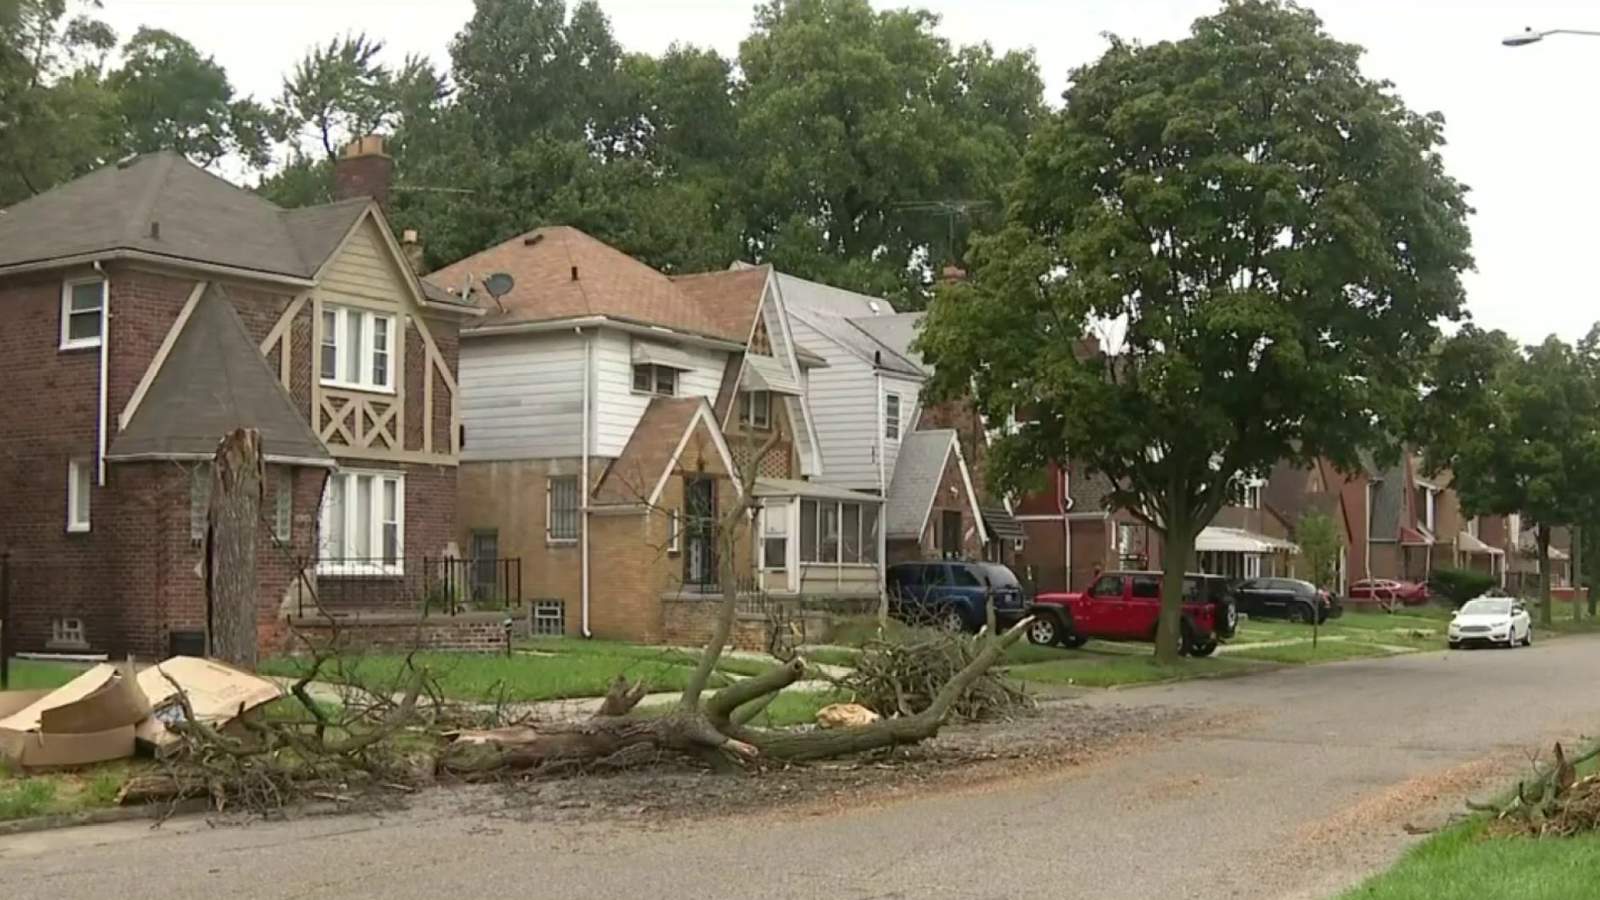 Residents concerned over safety issue after fallen tree, debris litter Detroit street